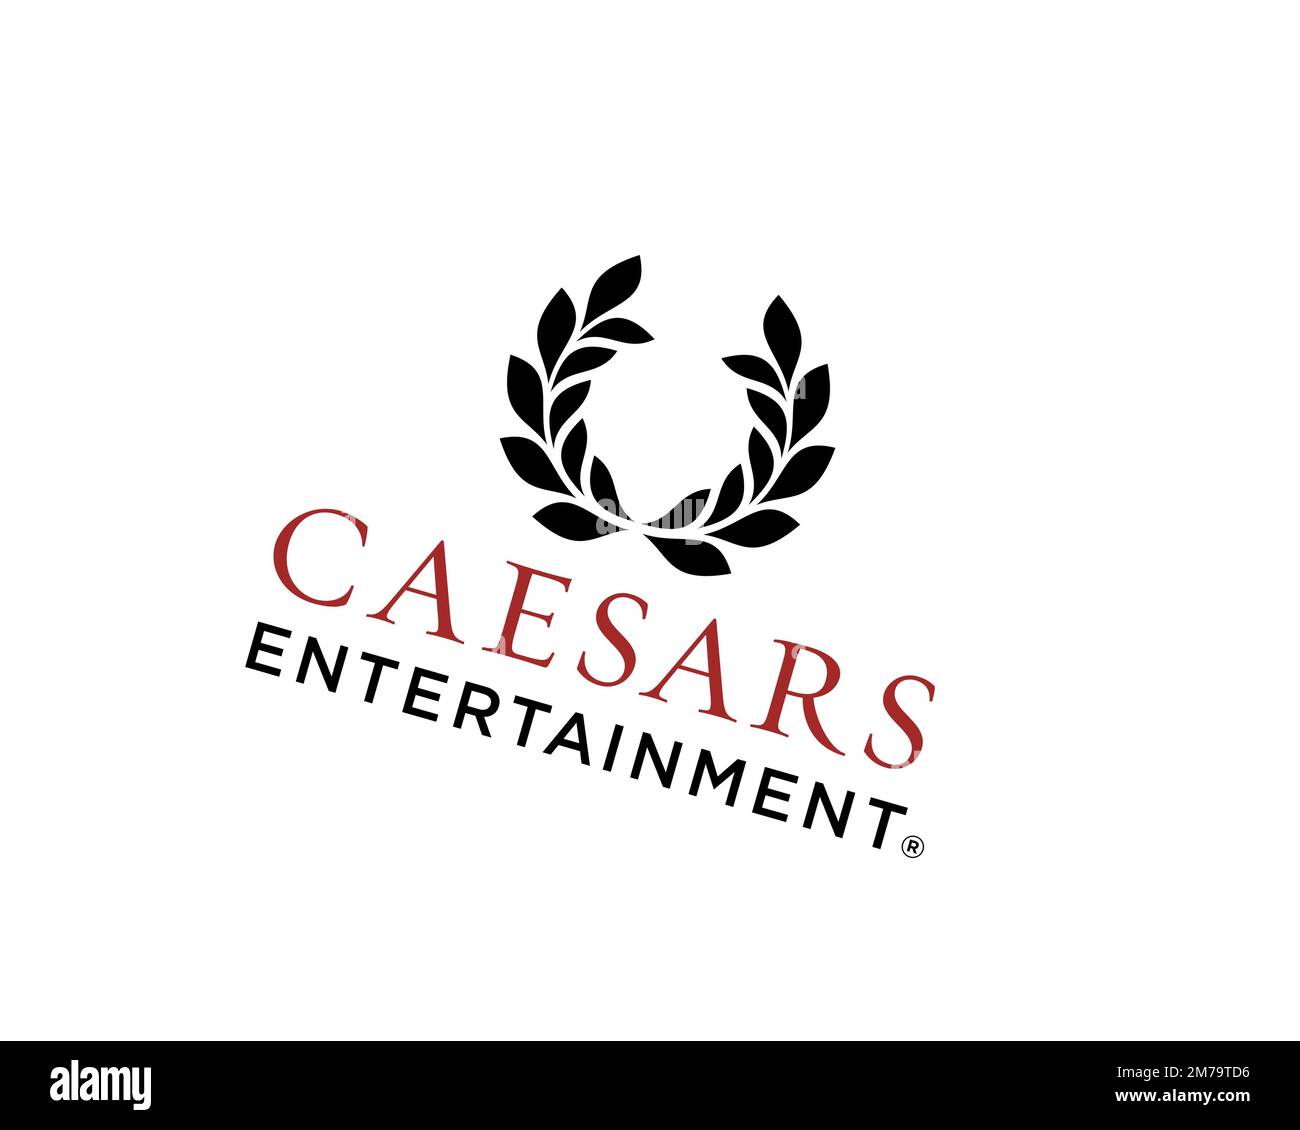 Caesars Entertainment Company, Corporation Caesars Entertainment Company, Corporation, logo ruotato, sfondo bianco B. Foto Stock